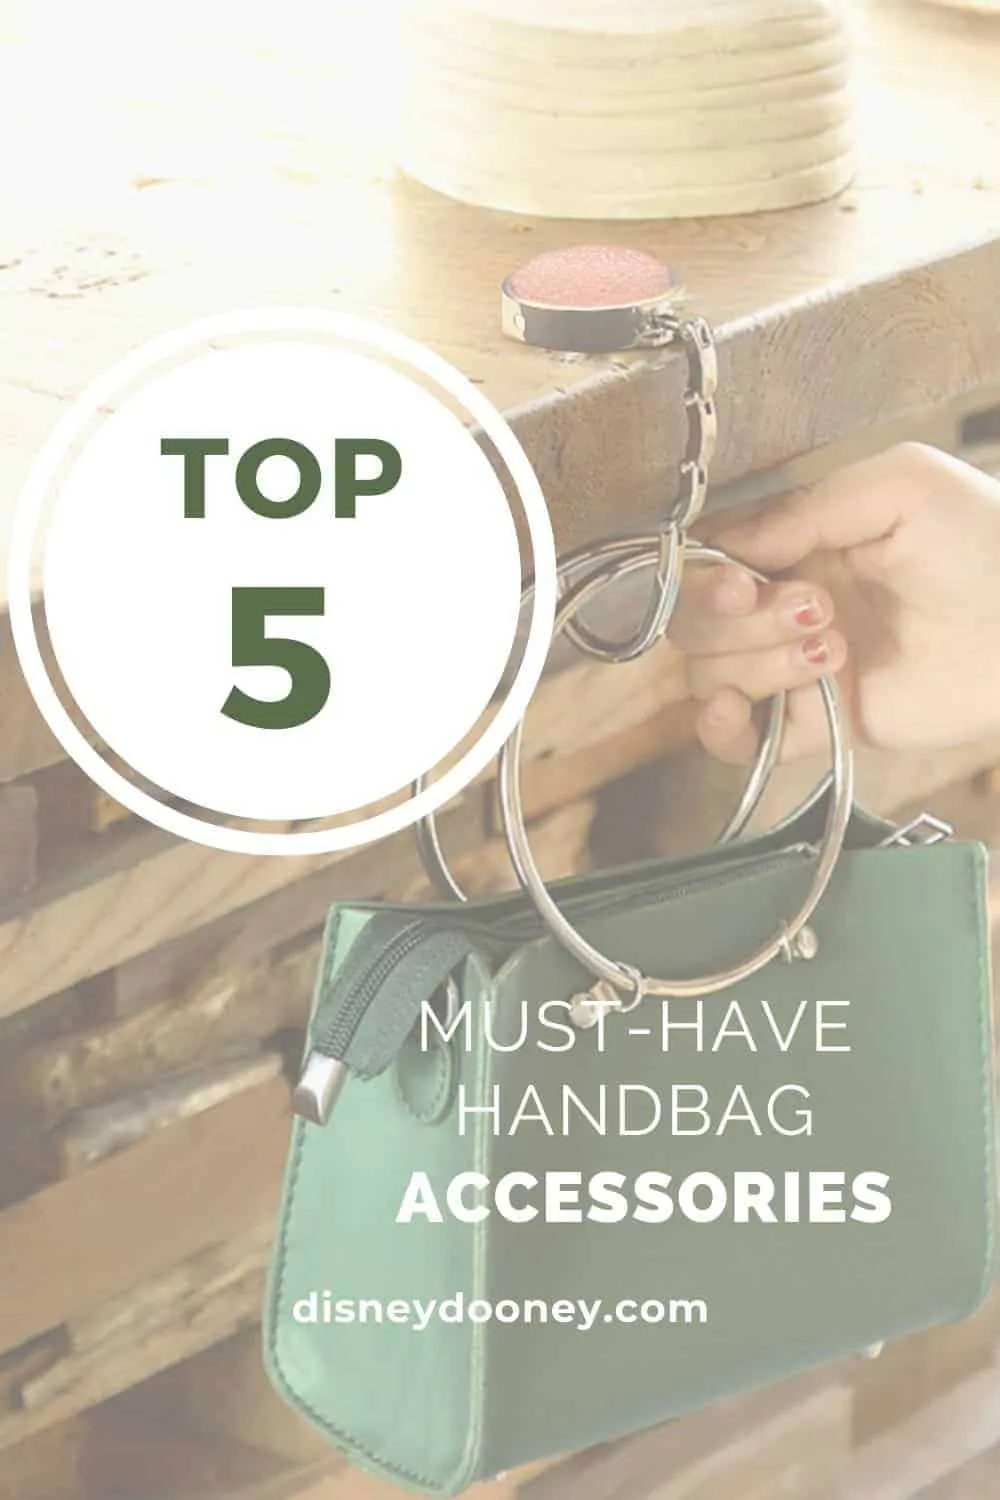 Pin me - Top 5 Must-Have Handbag Accessories